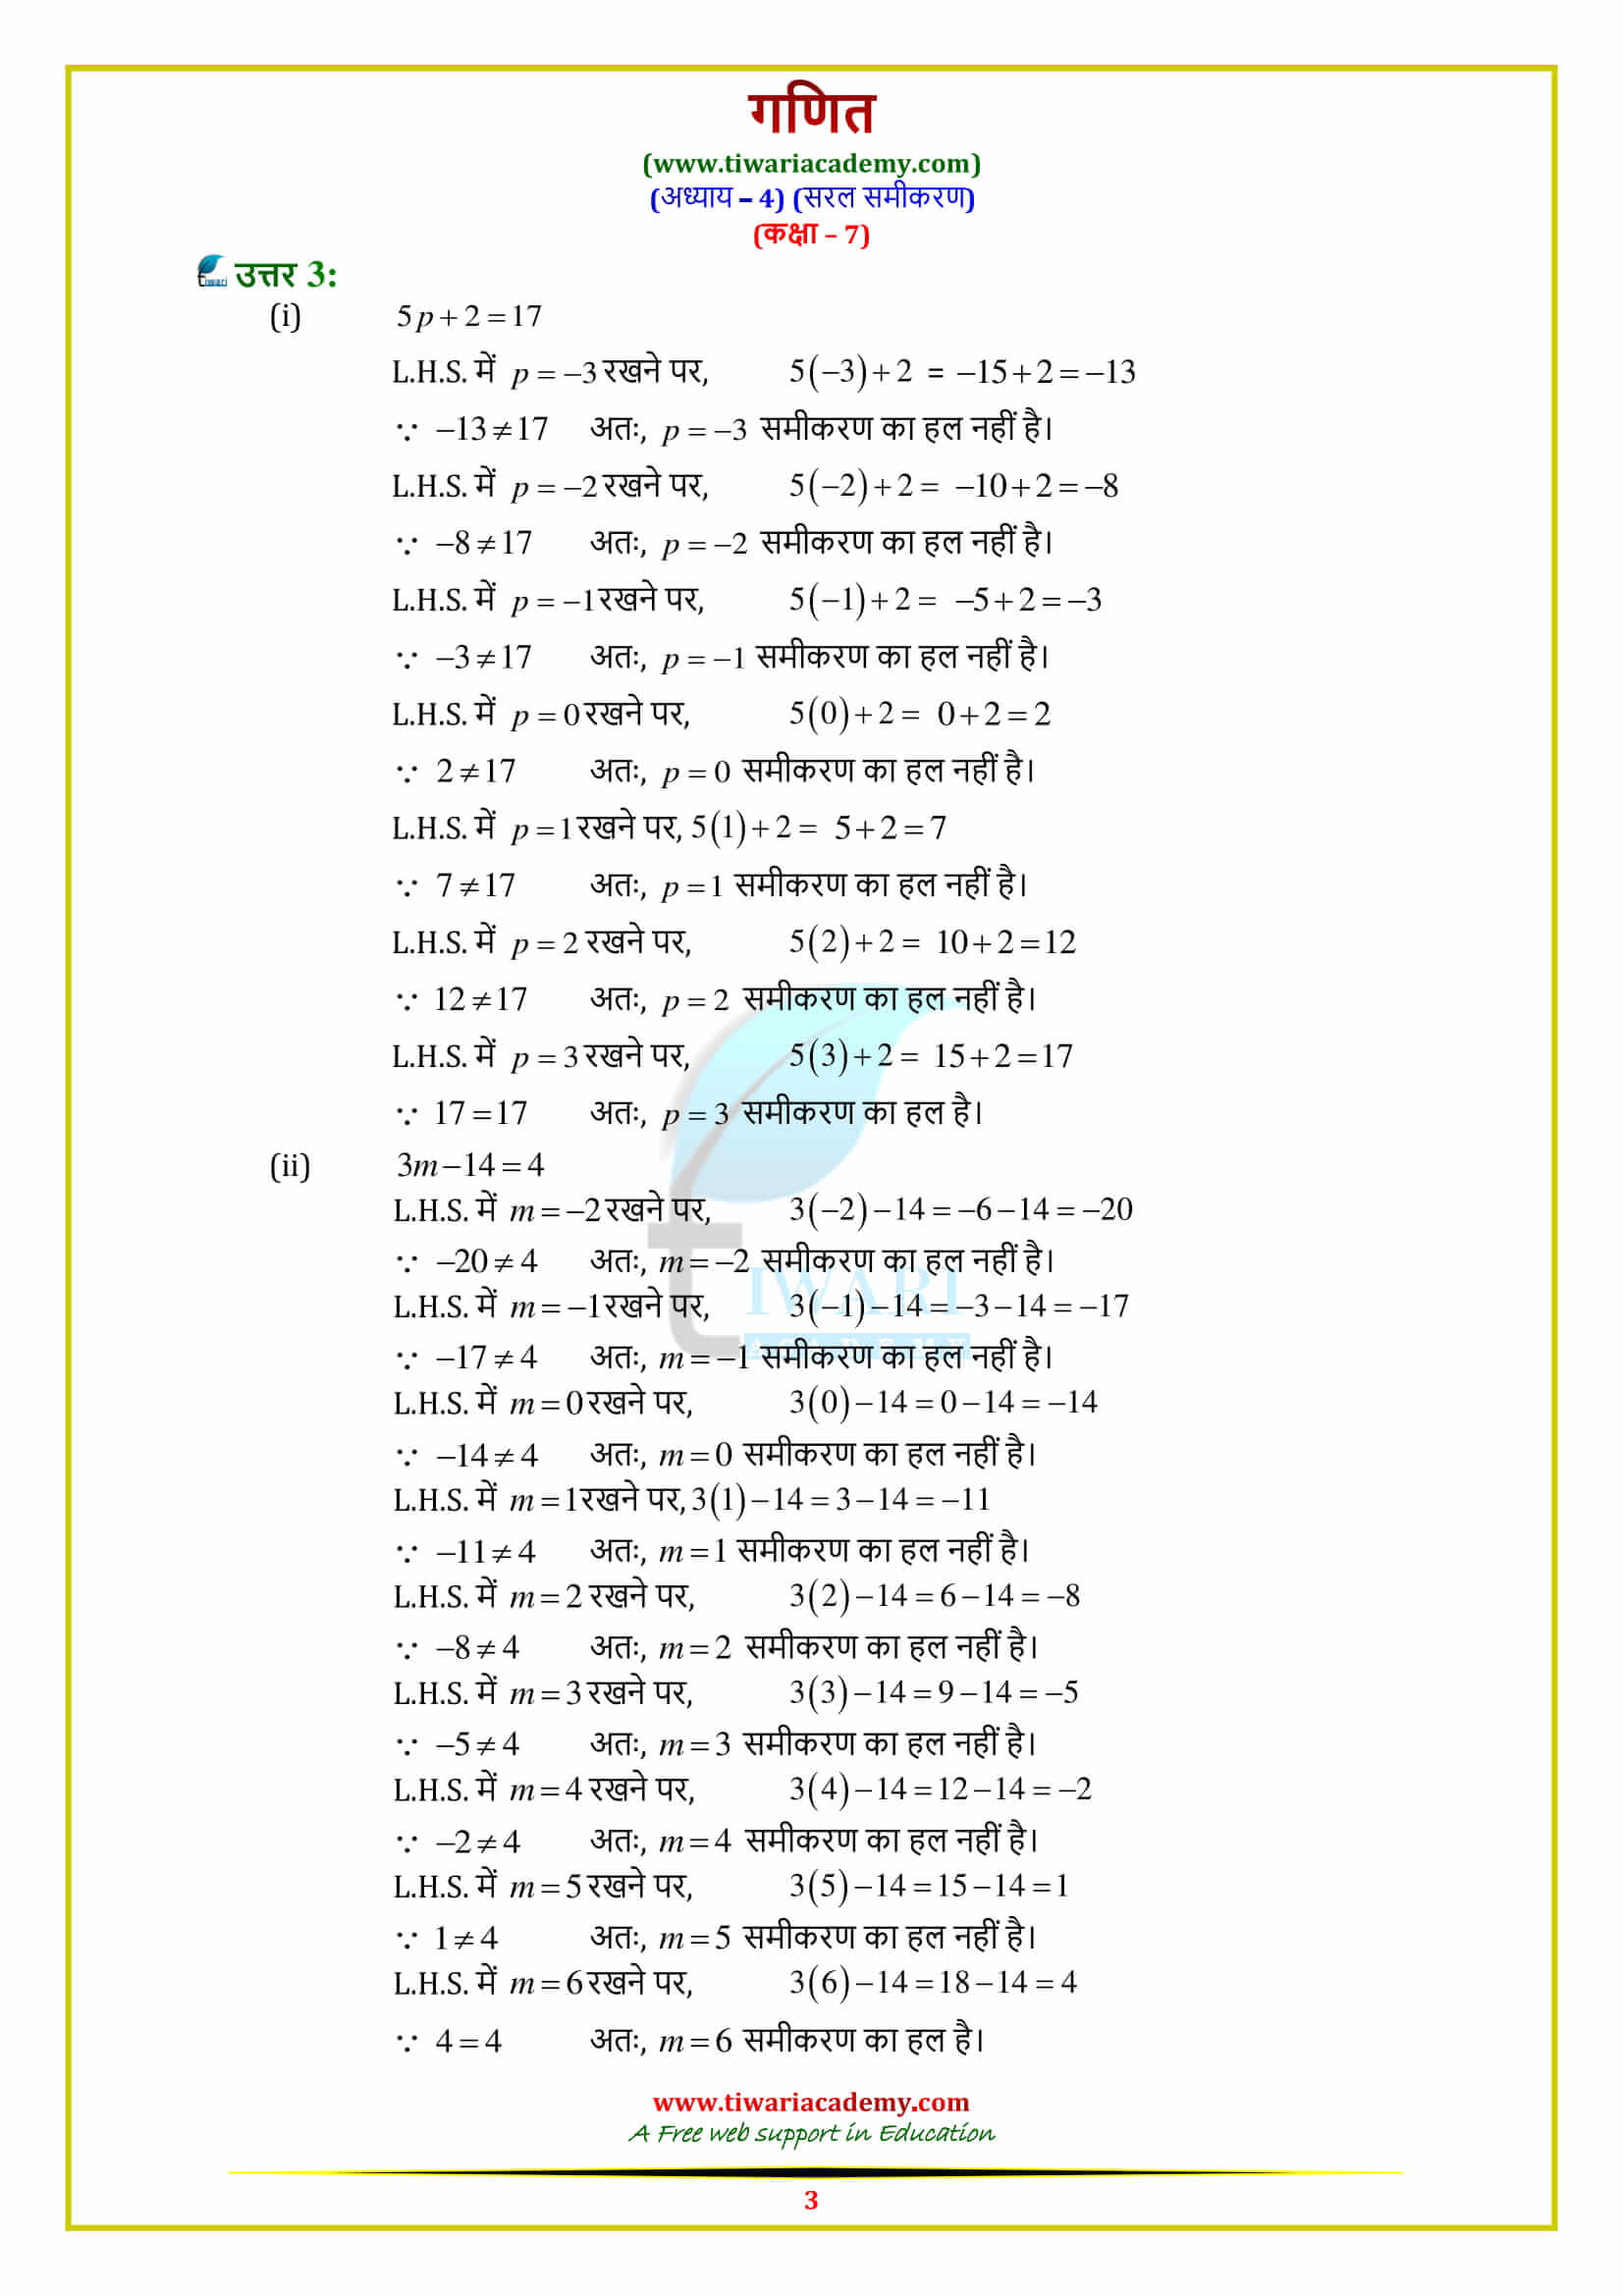 7 Maths Exercise 4.1 solutions in hindi medium pdf